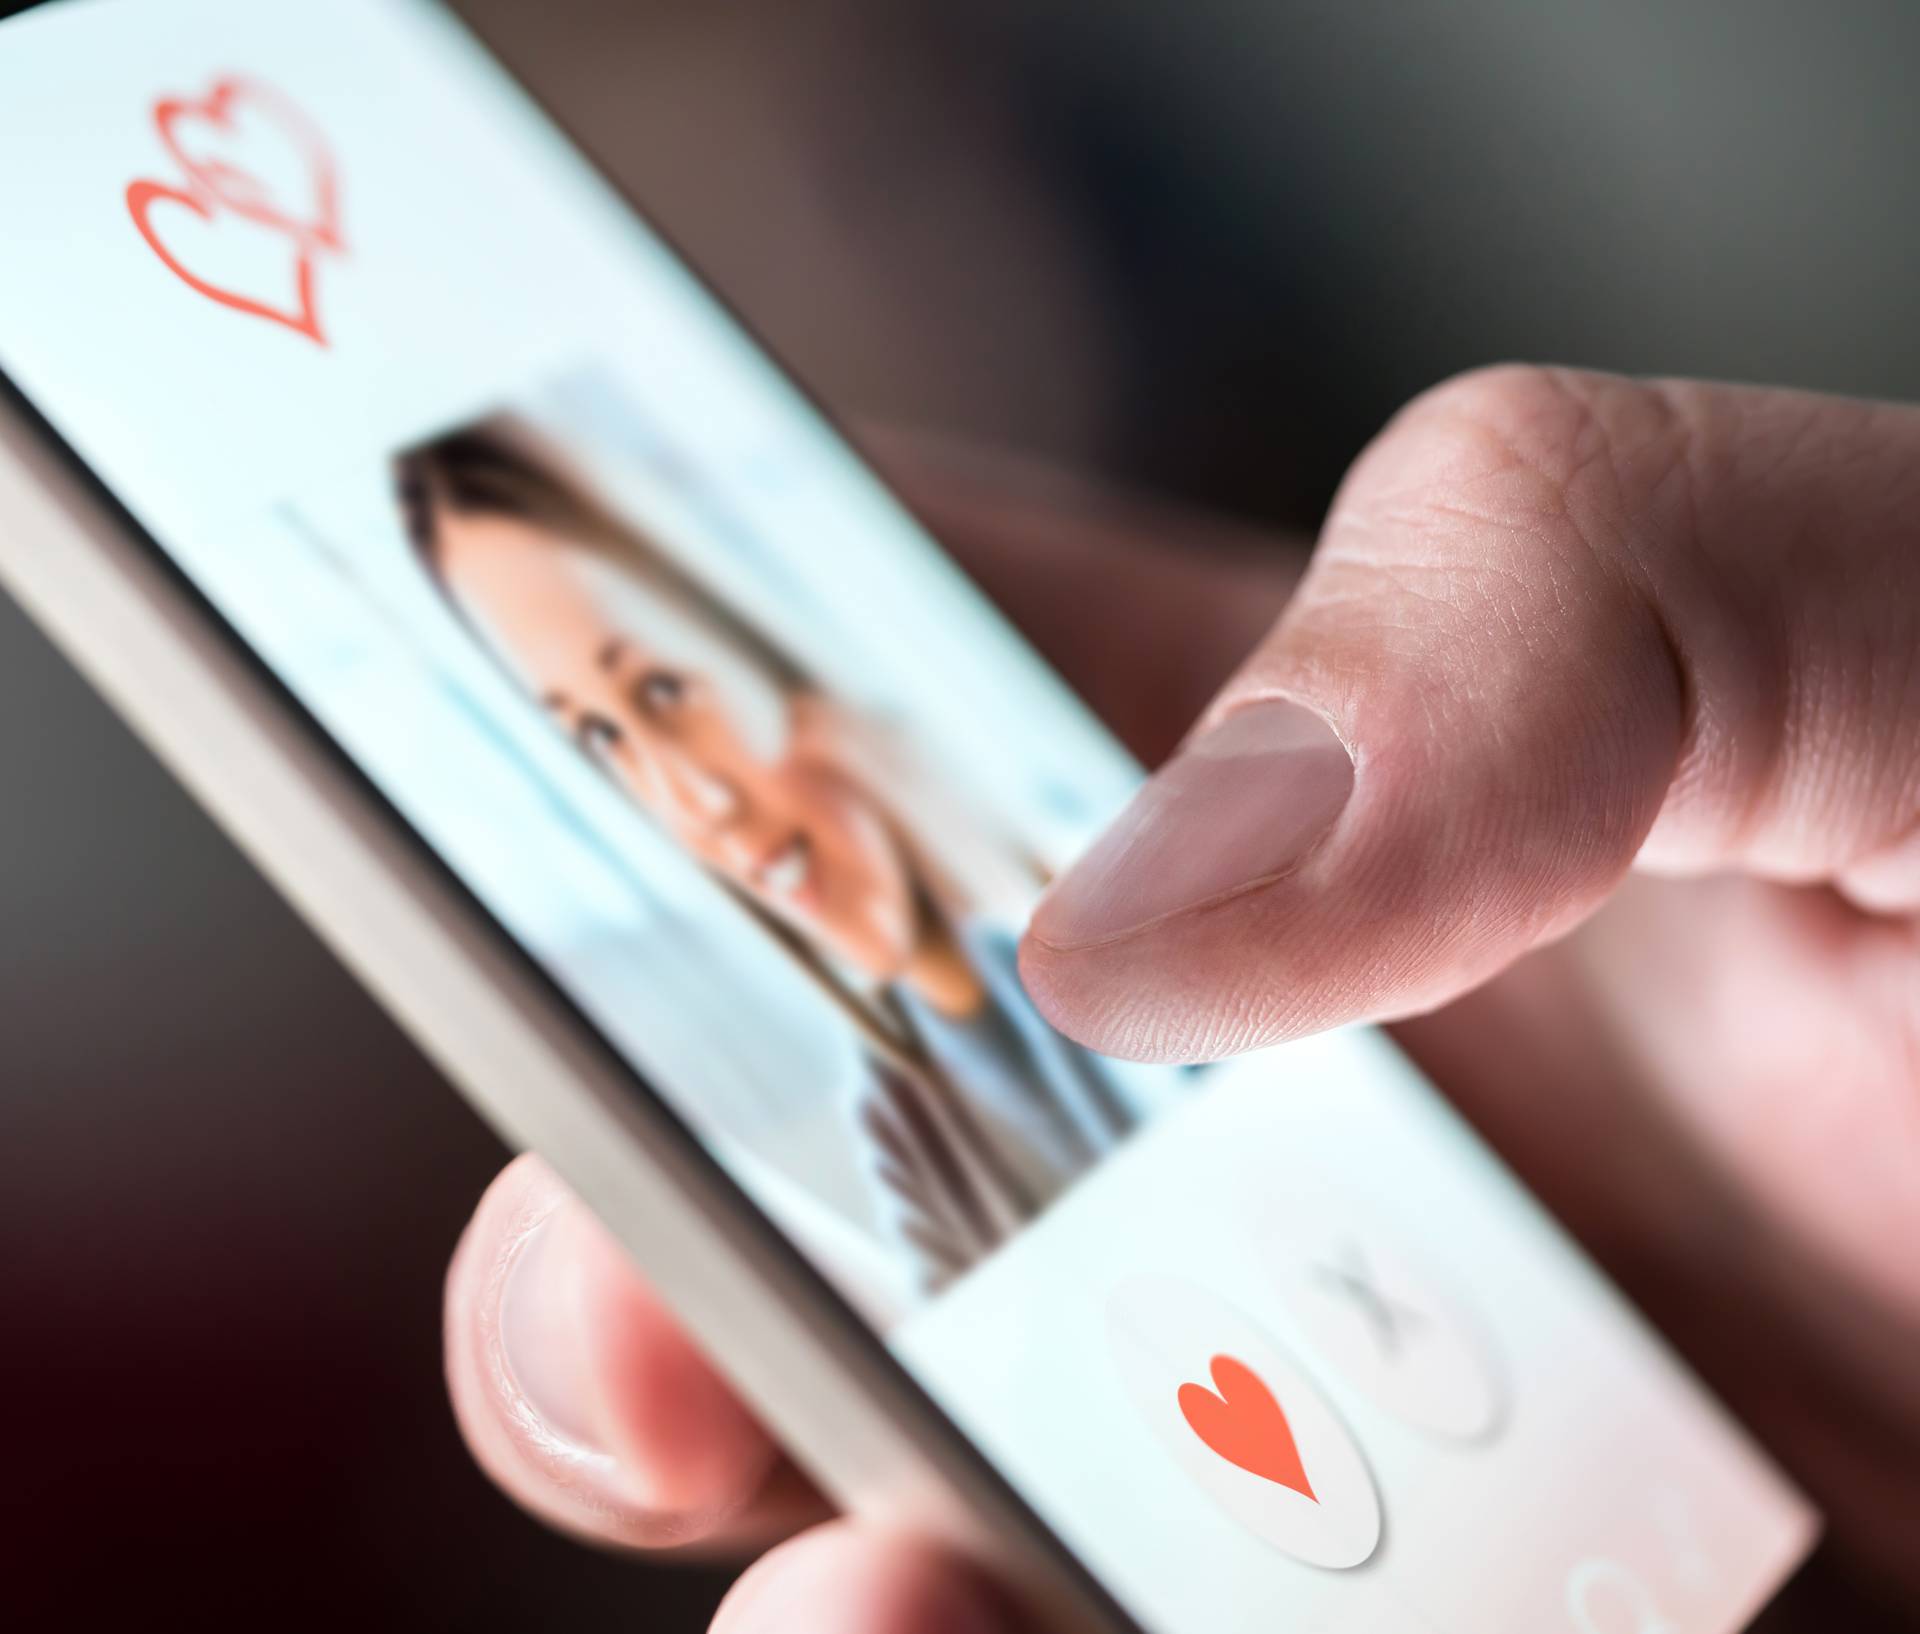 Online dating app in smartphone. Man looking at photo of beautif